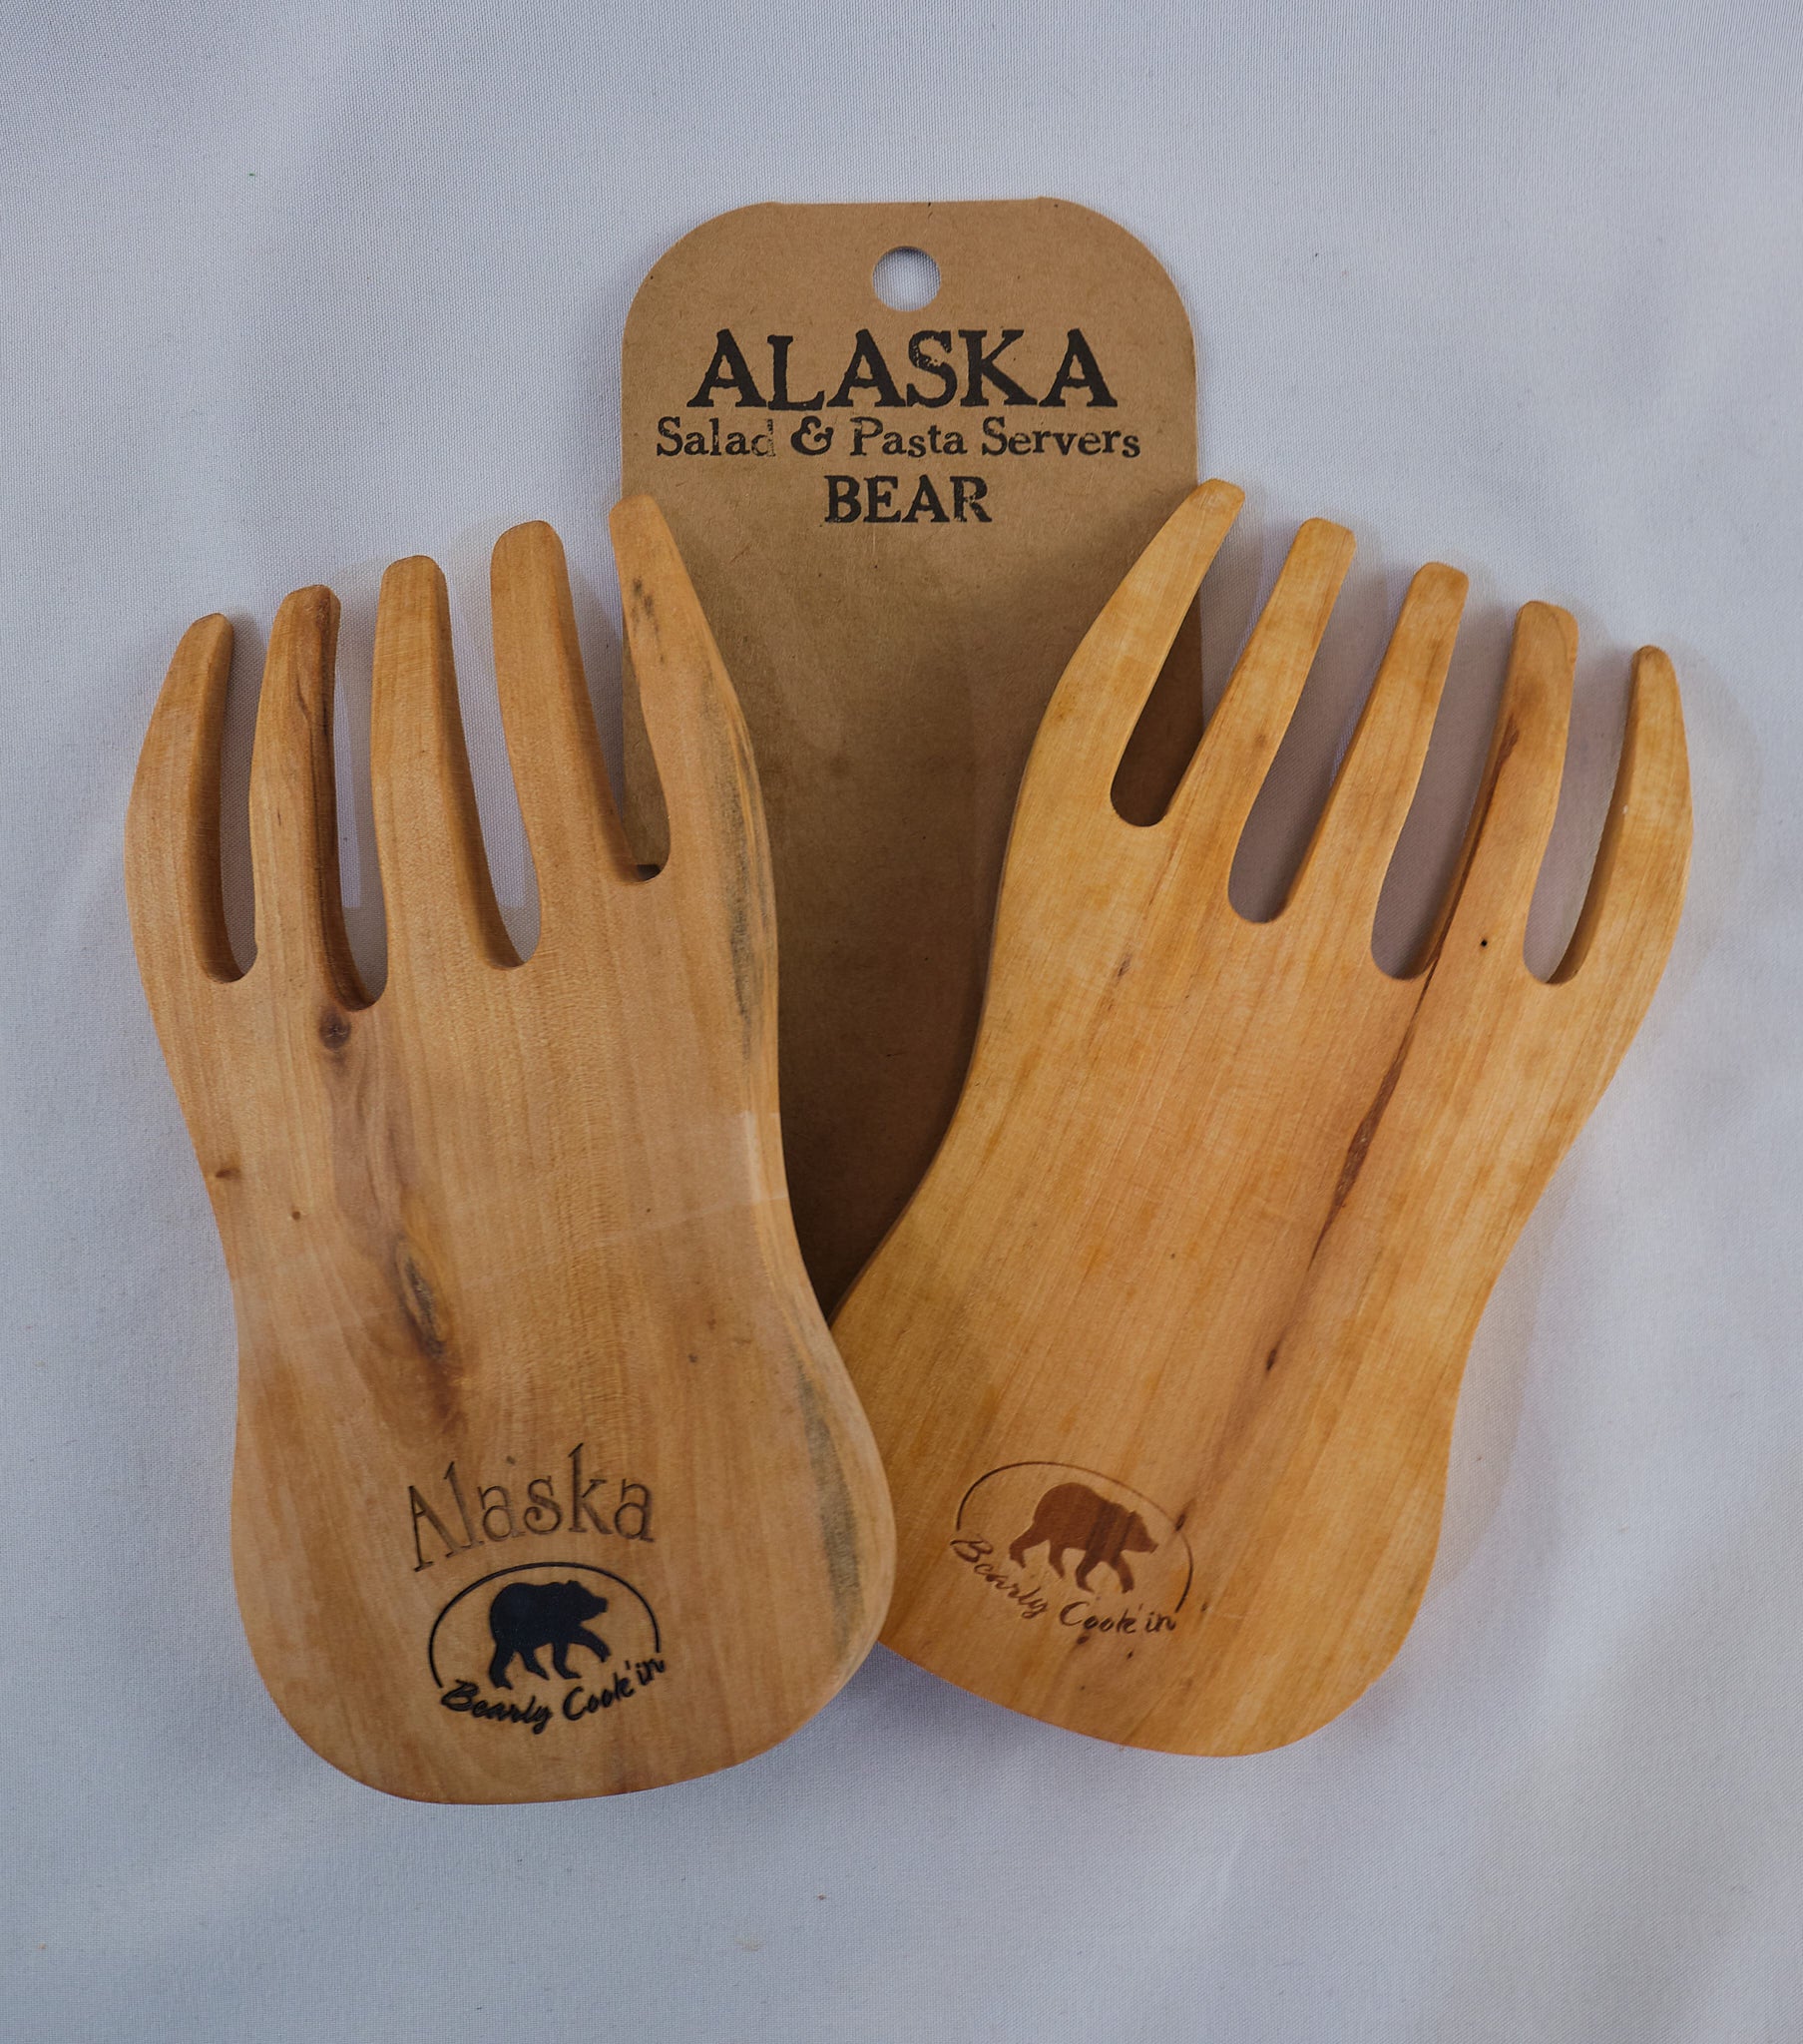 Bear Paw Wooden Alaska Salad/Pasta Servers